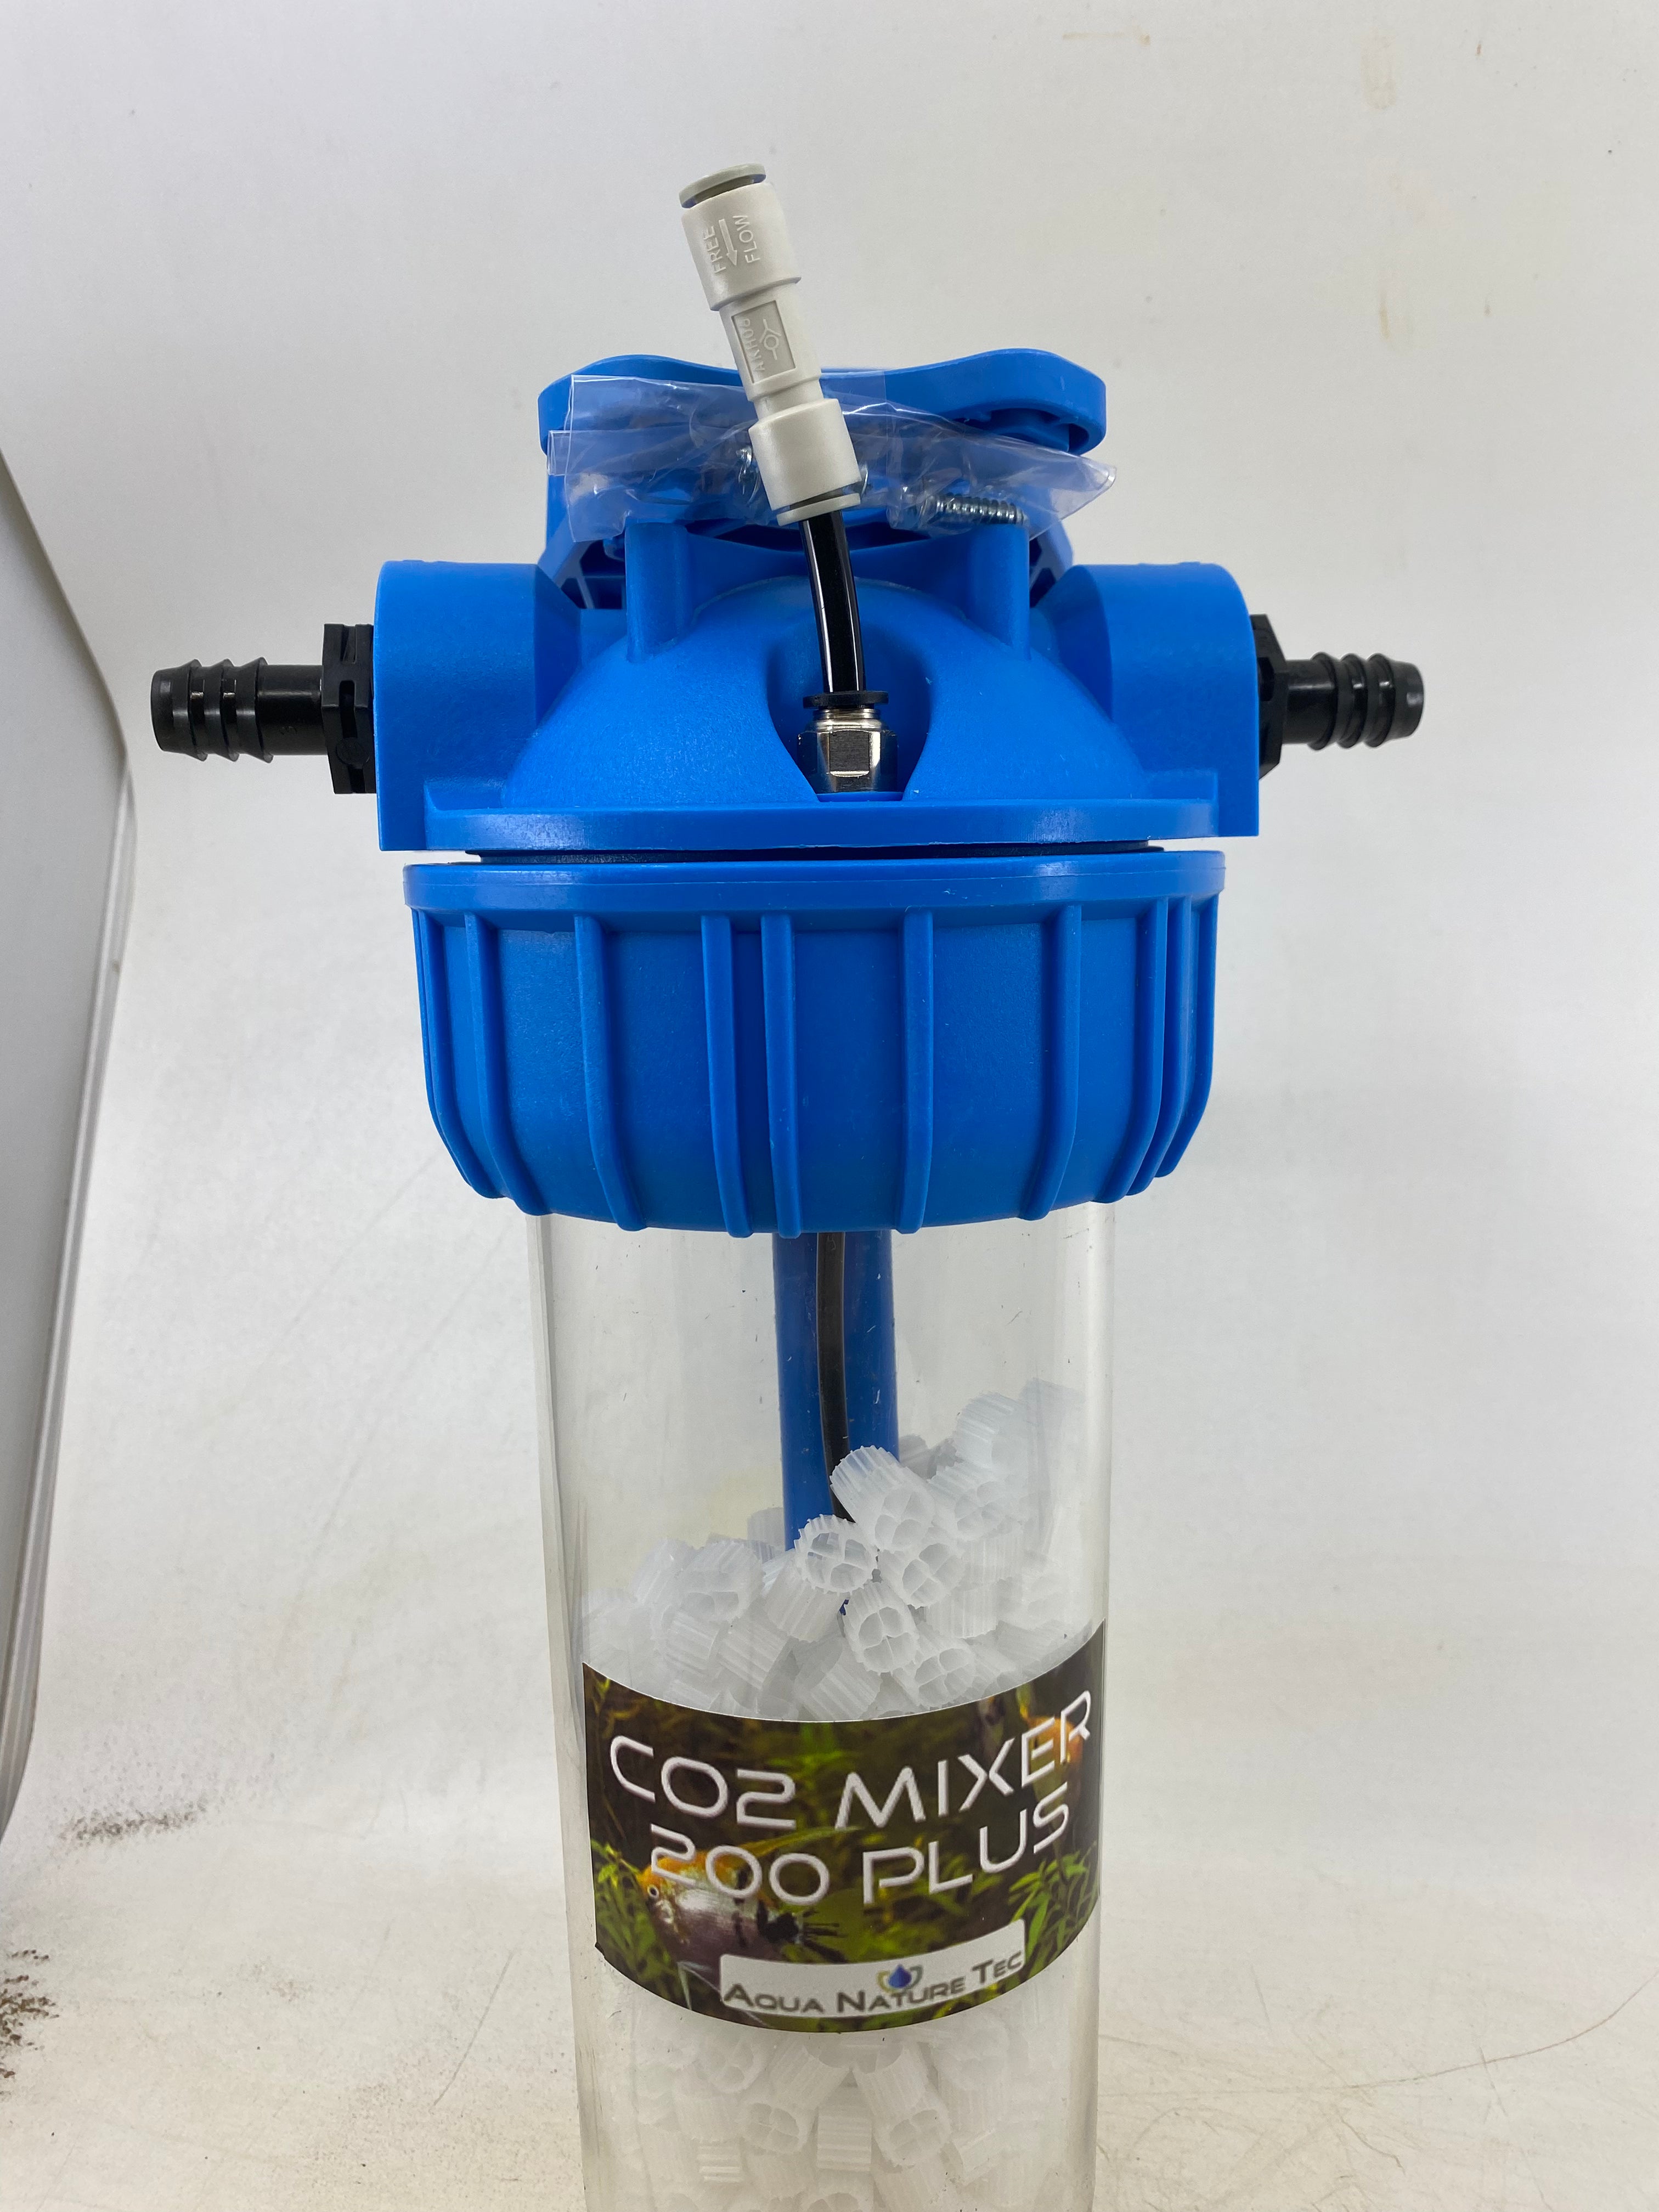 CO2 Mixer 200Plus